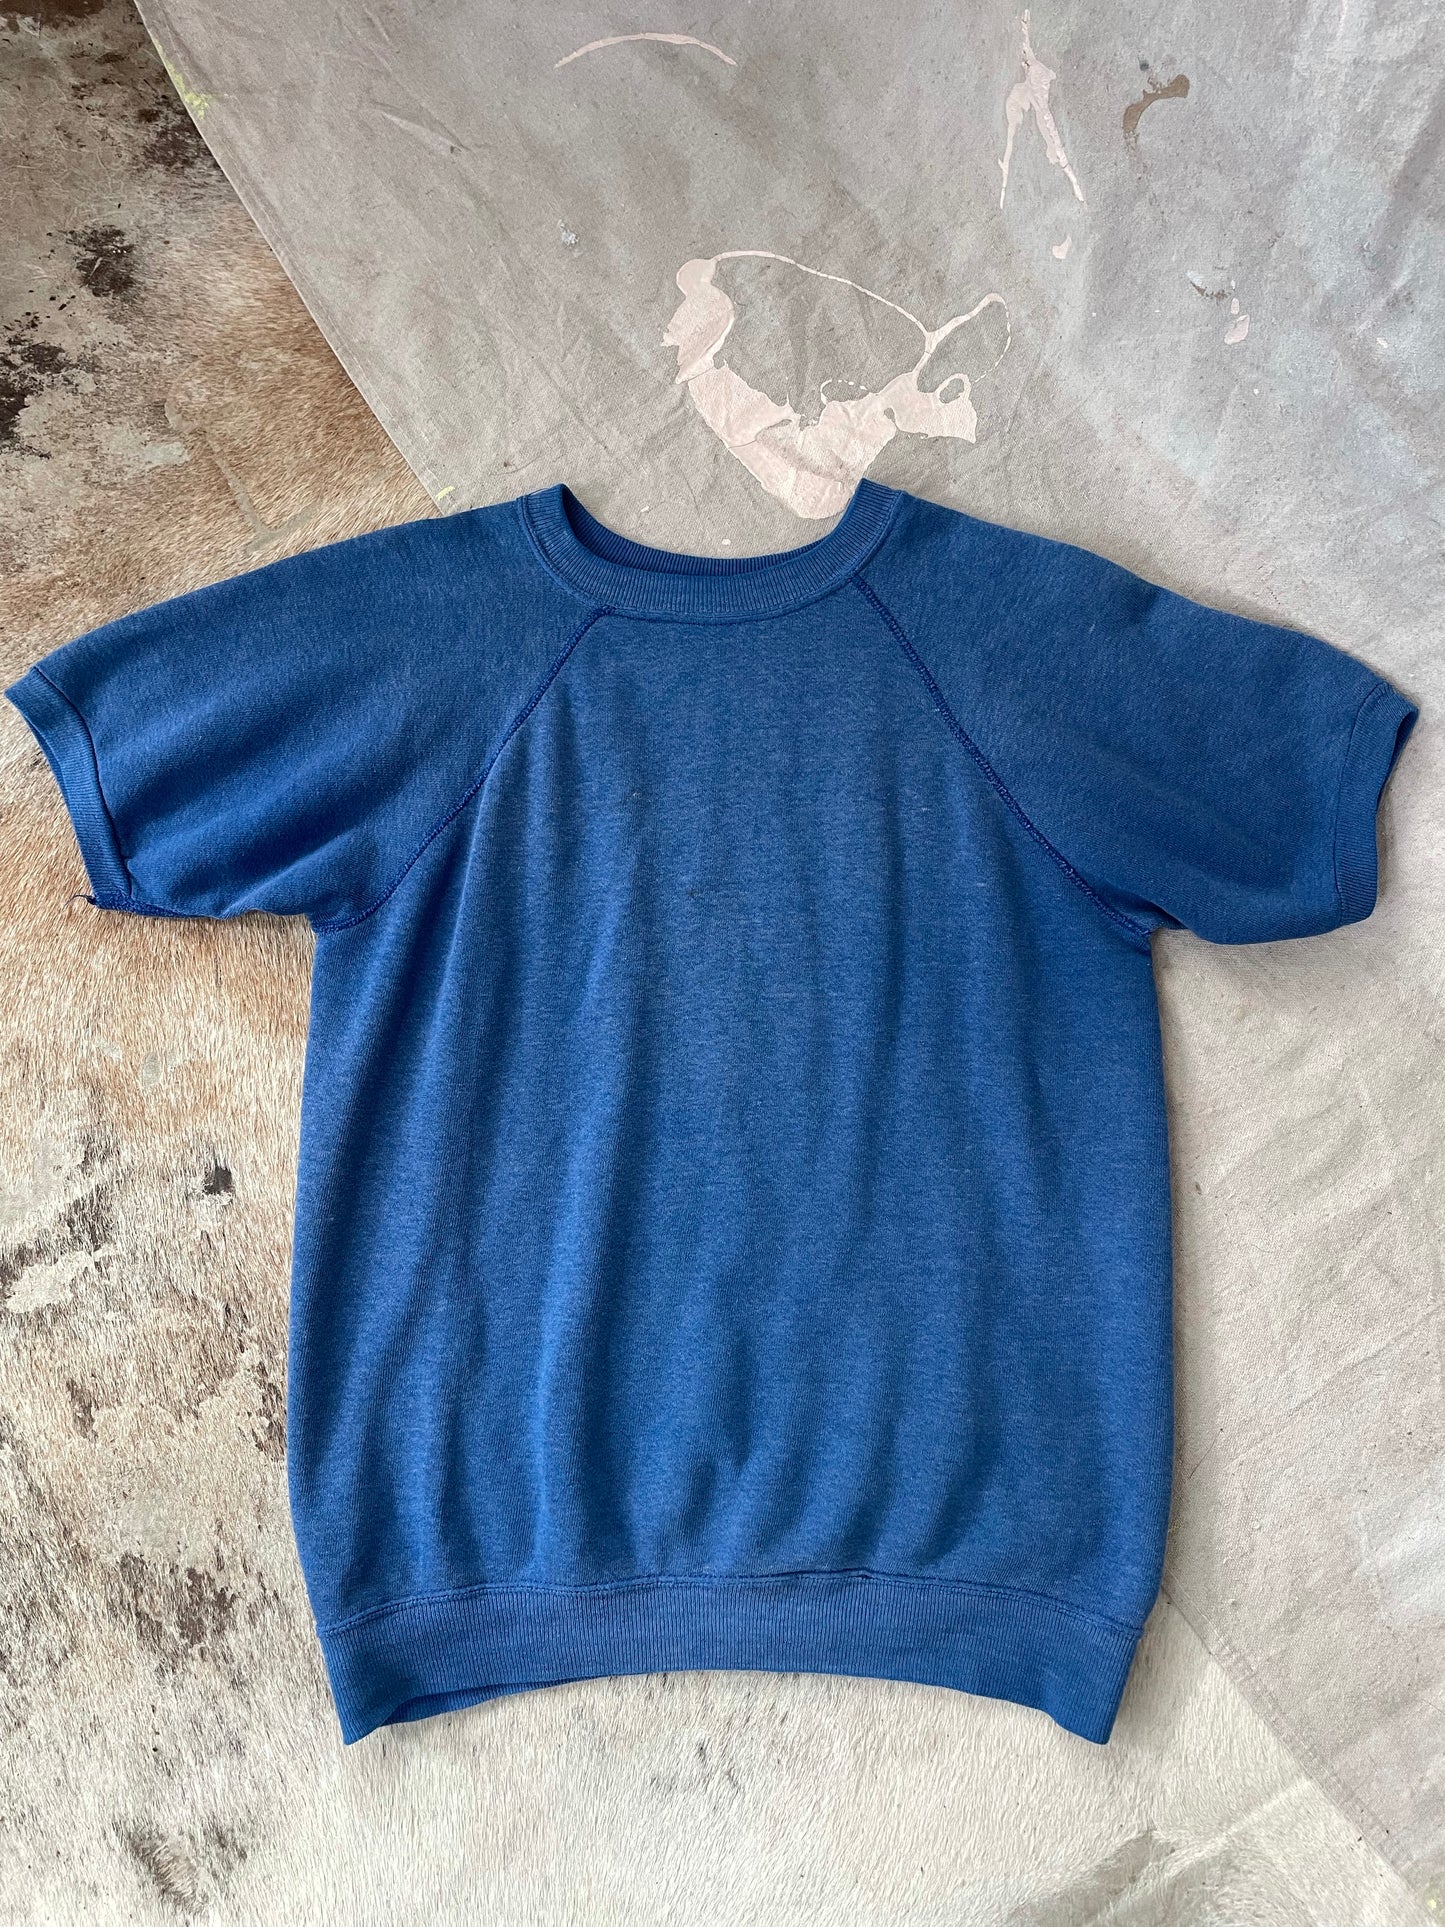 70s/80s Blank Cerulean Blue Short Sleeve Sweatshirt